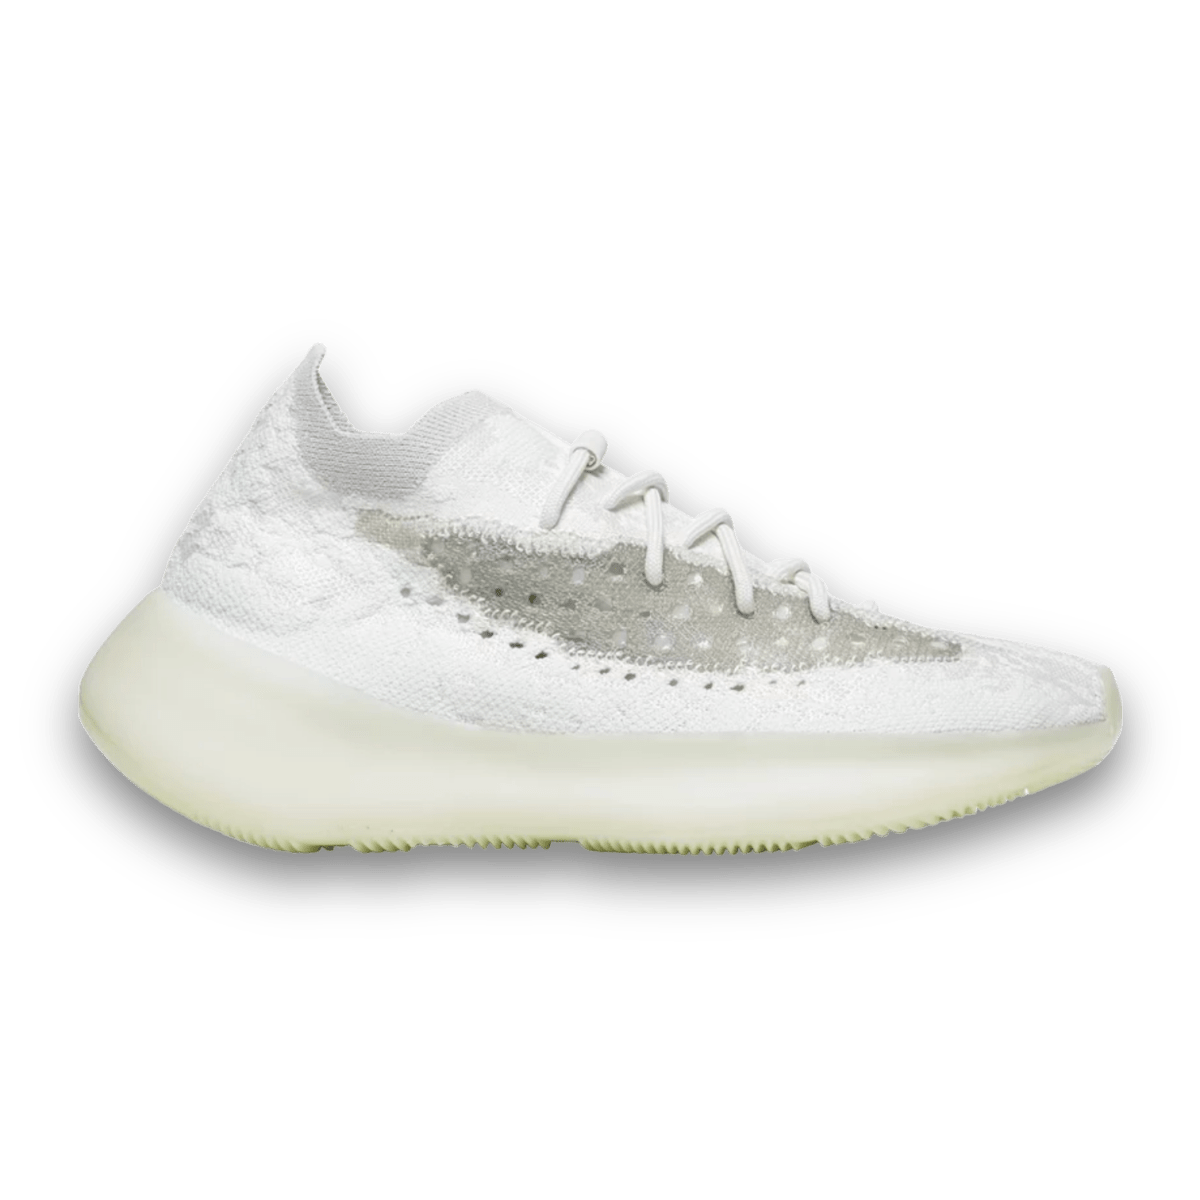 adidas Yeezy Boost 380 Calcite Glow - Low Sneaker - Yeezy - Jawns on Fire - sneakers